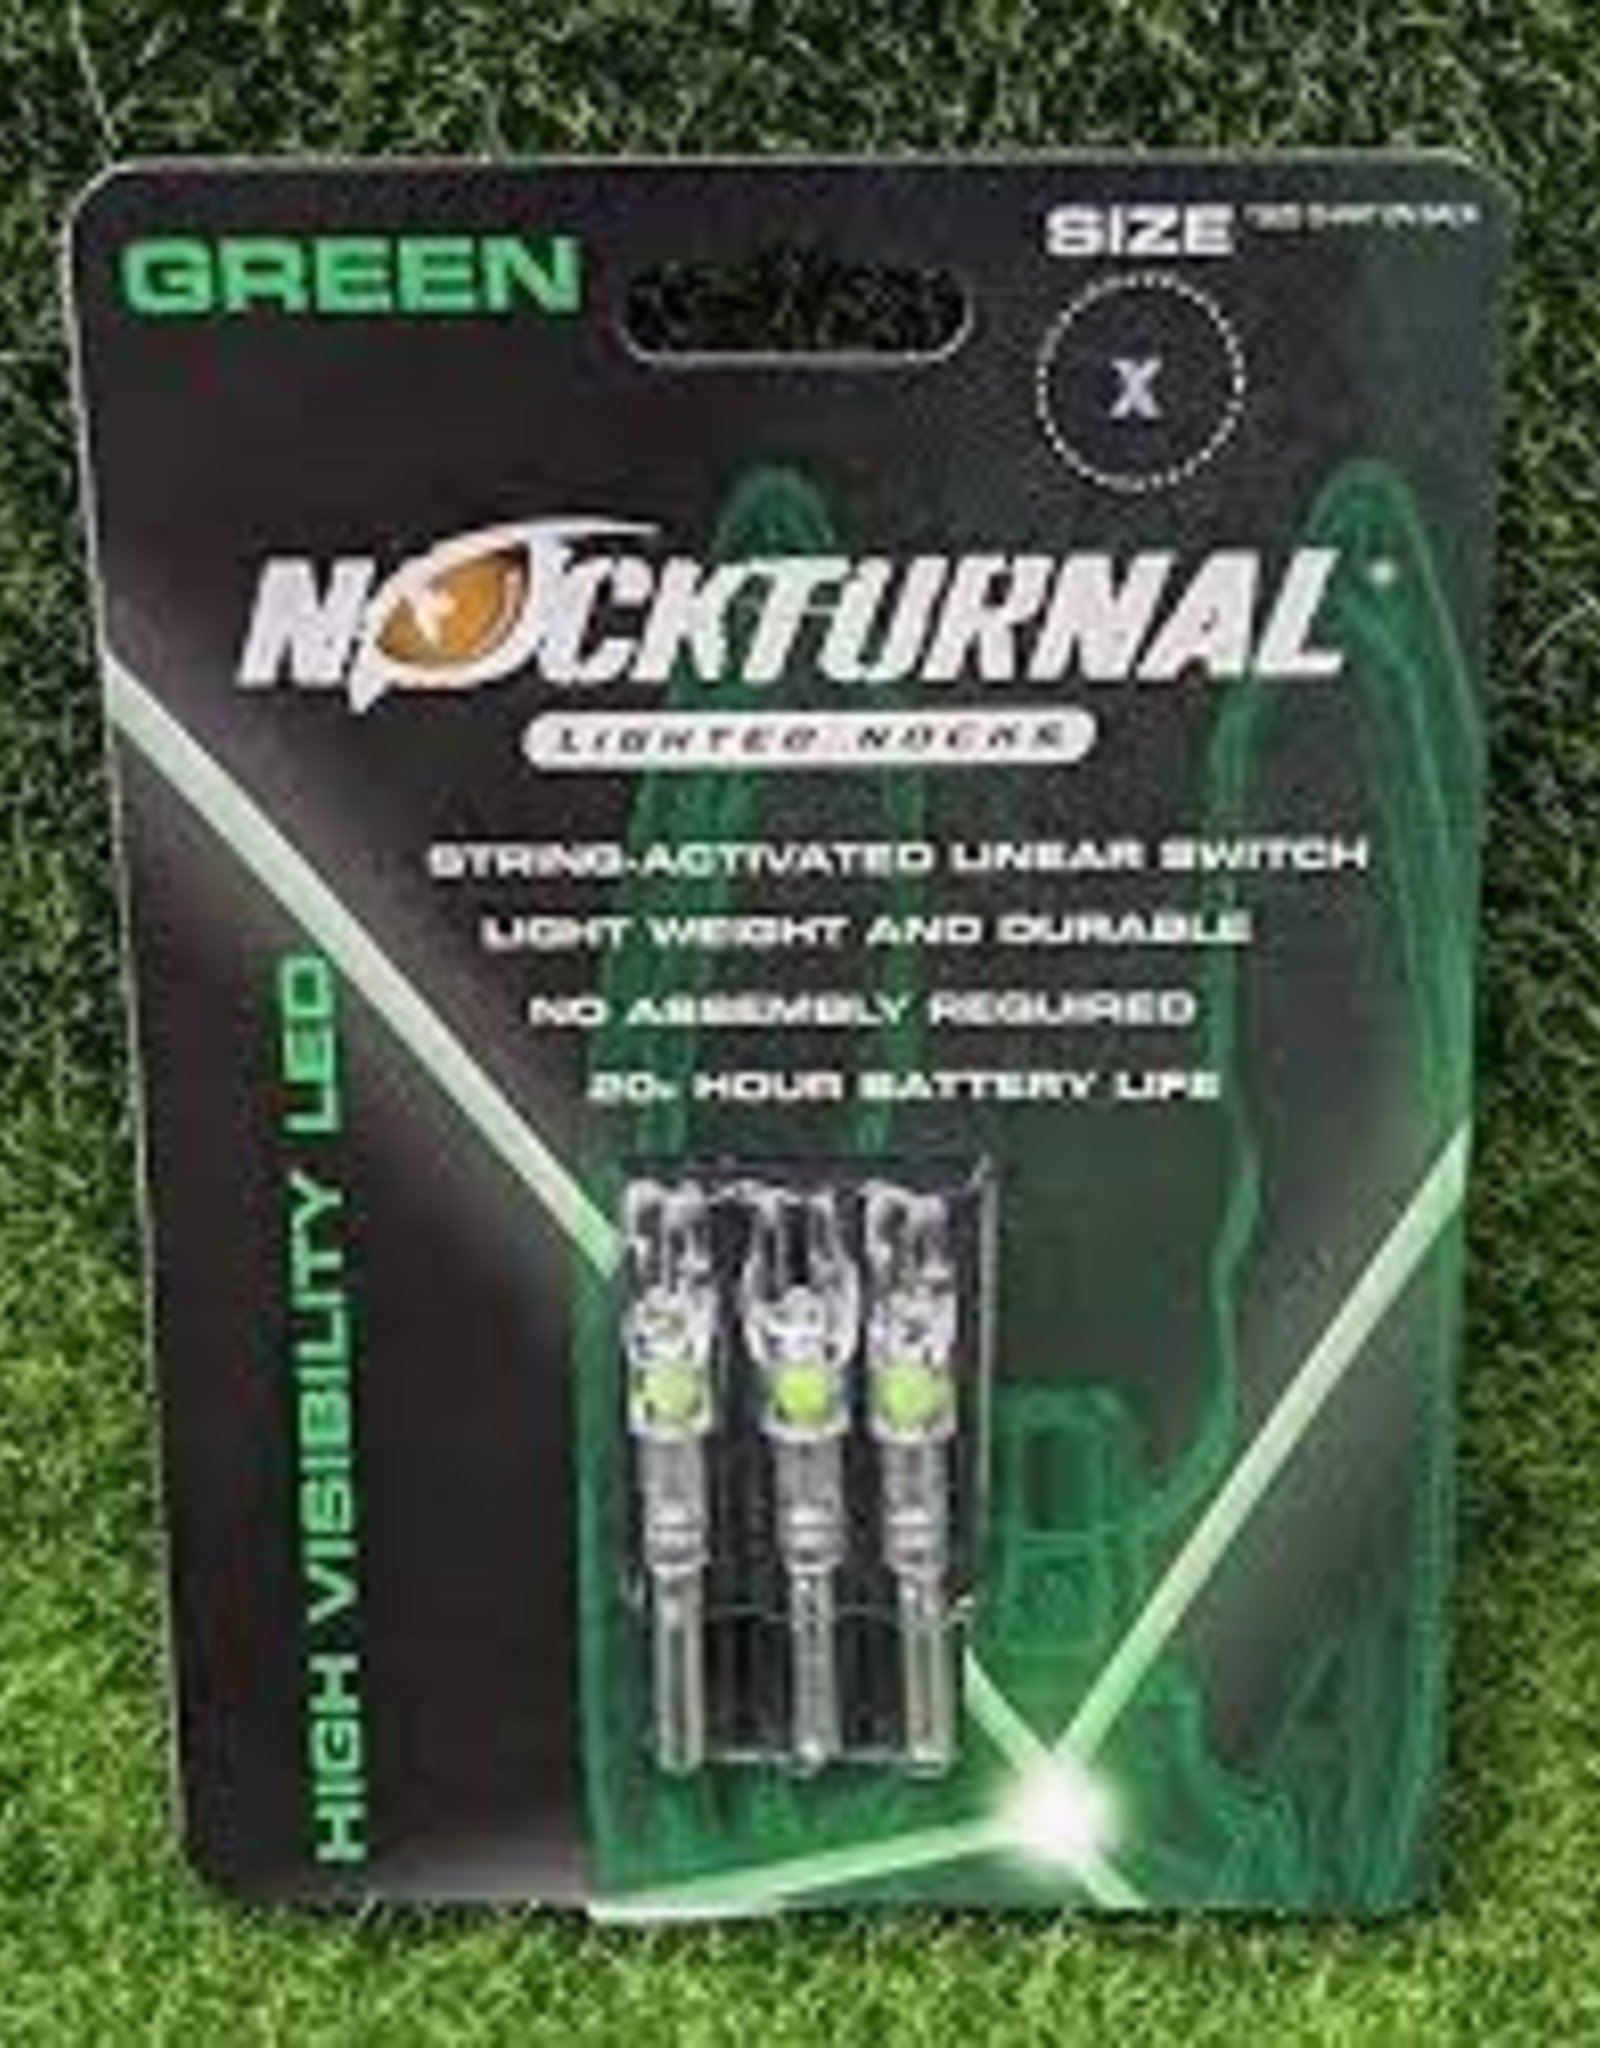 Nockturnal Lighted Nock 3 Pack